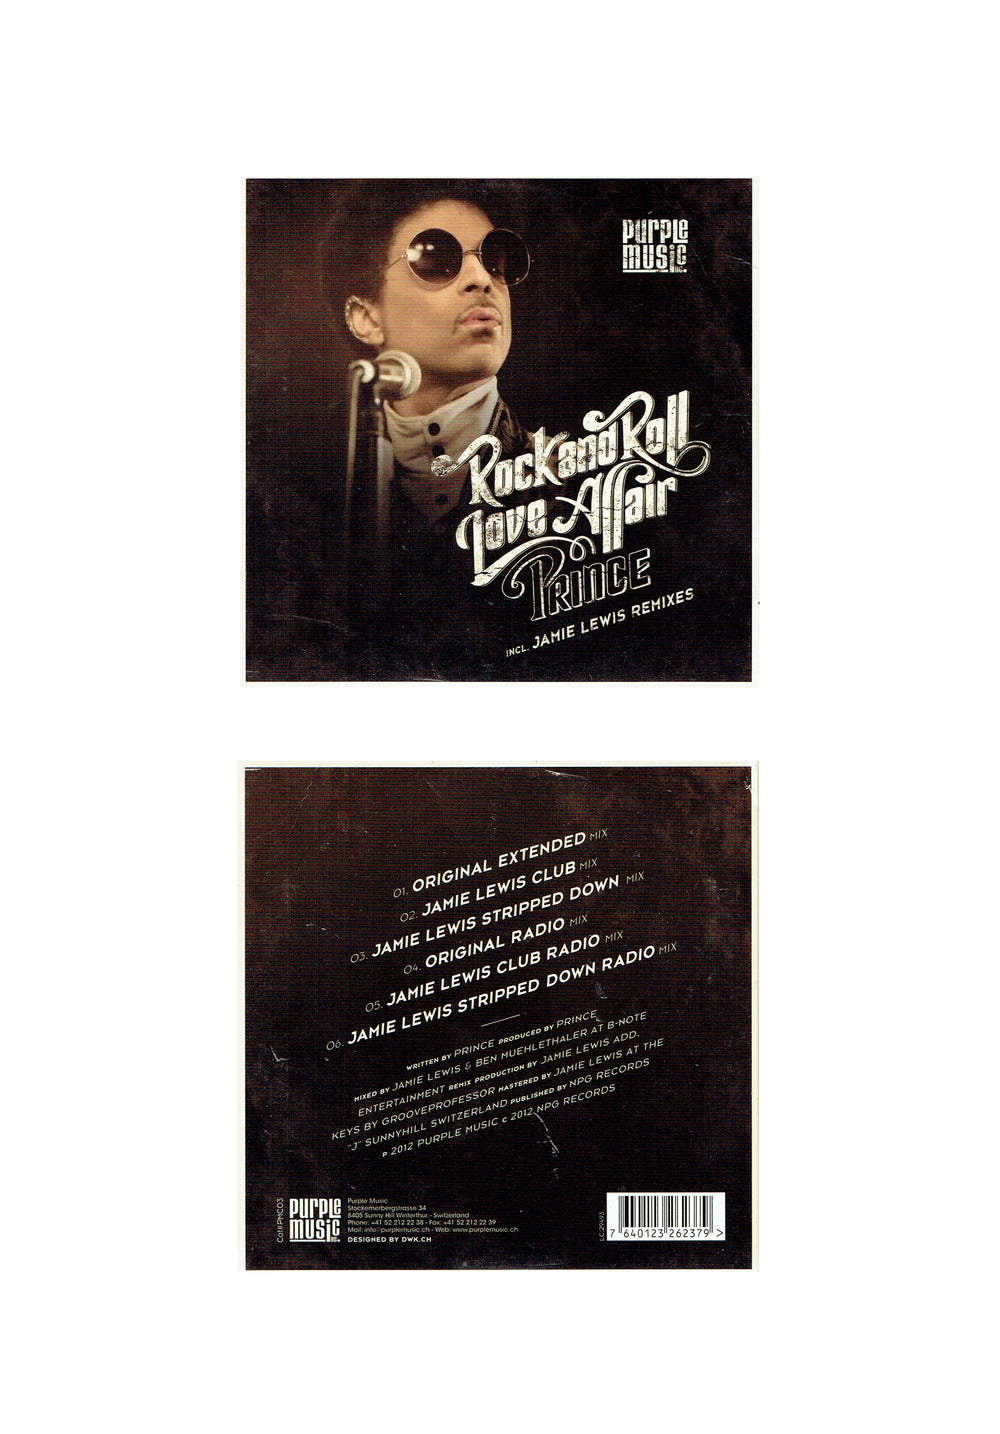 Prince – Rock and Roll Love Affair CD EU 5 Inch CD Single 2012 6 Tracks RARE Preloved: 2012